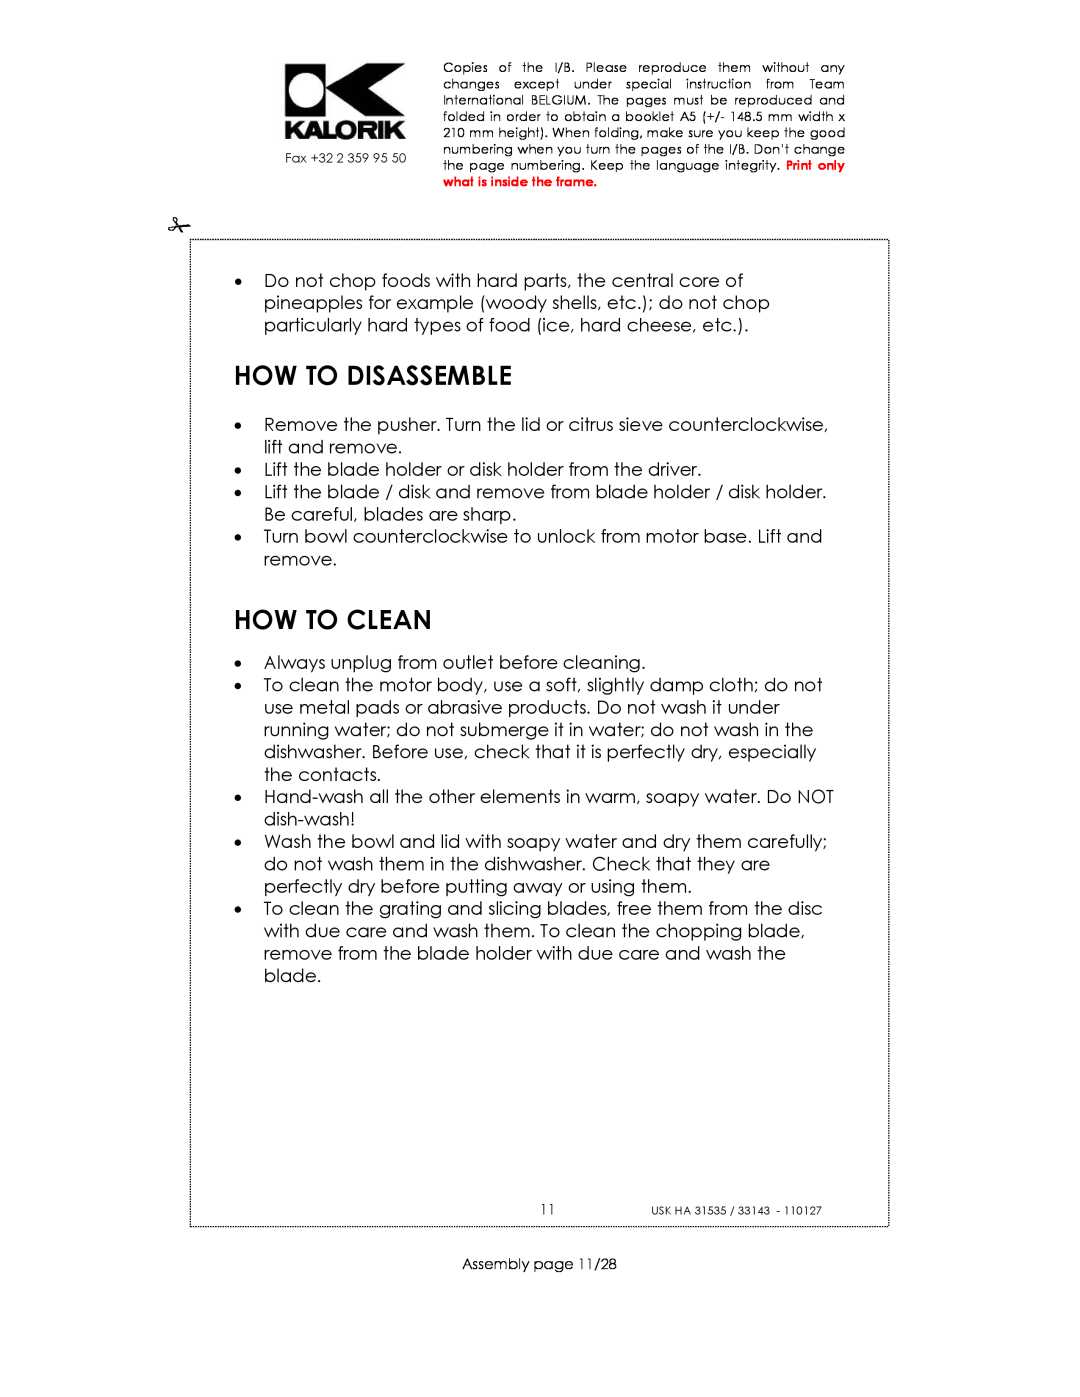 Kalorik USK HA 33143, USK HA 31535 manual How To Disassemble, How To Clean 